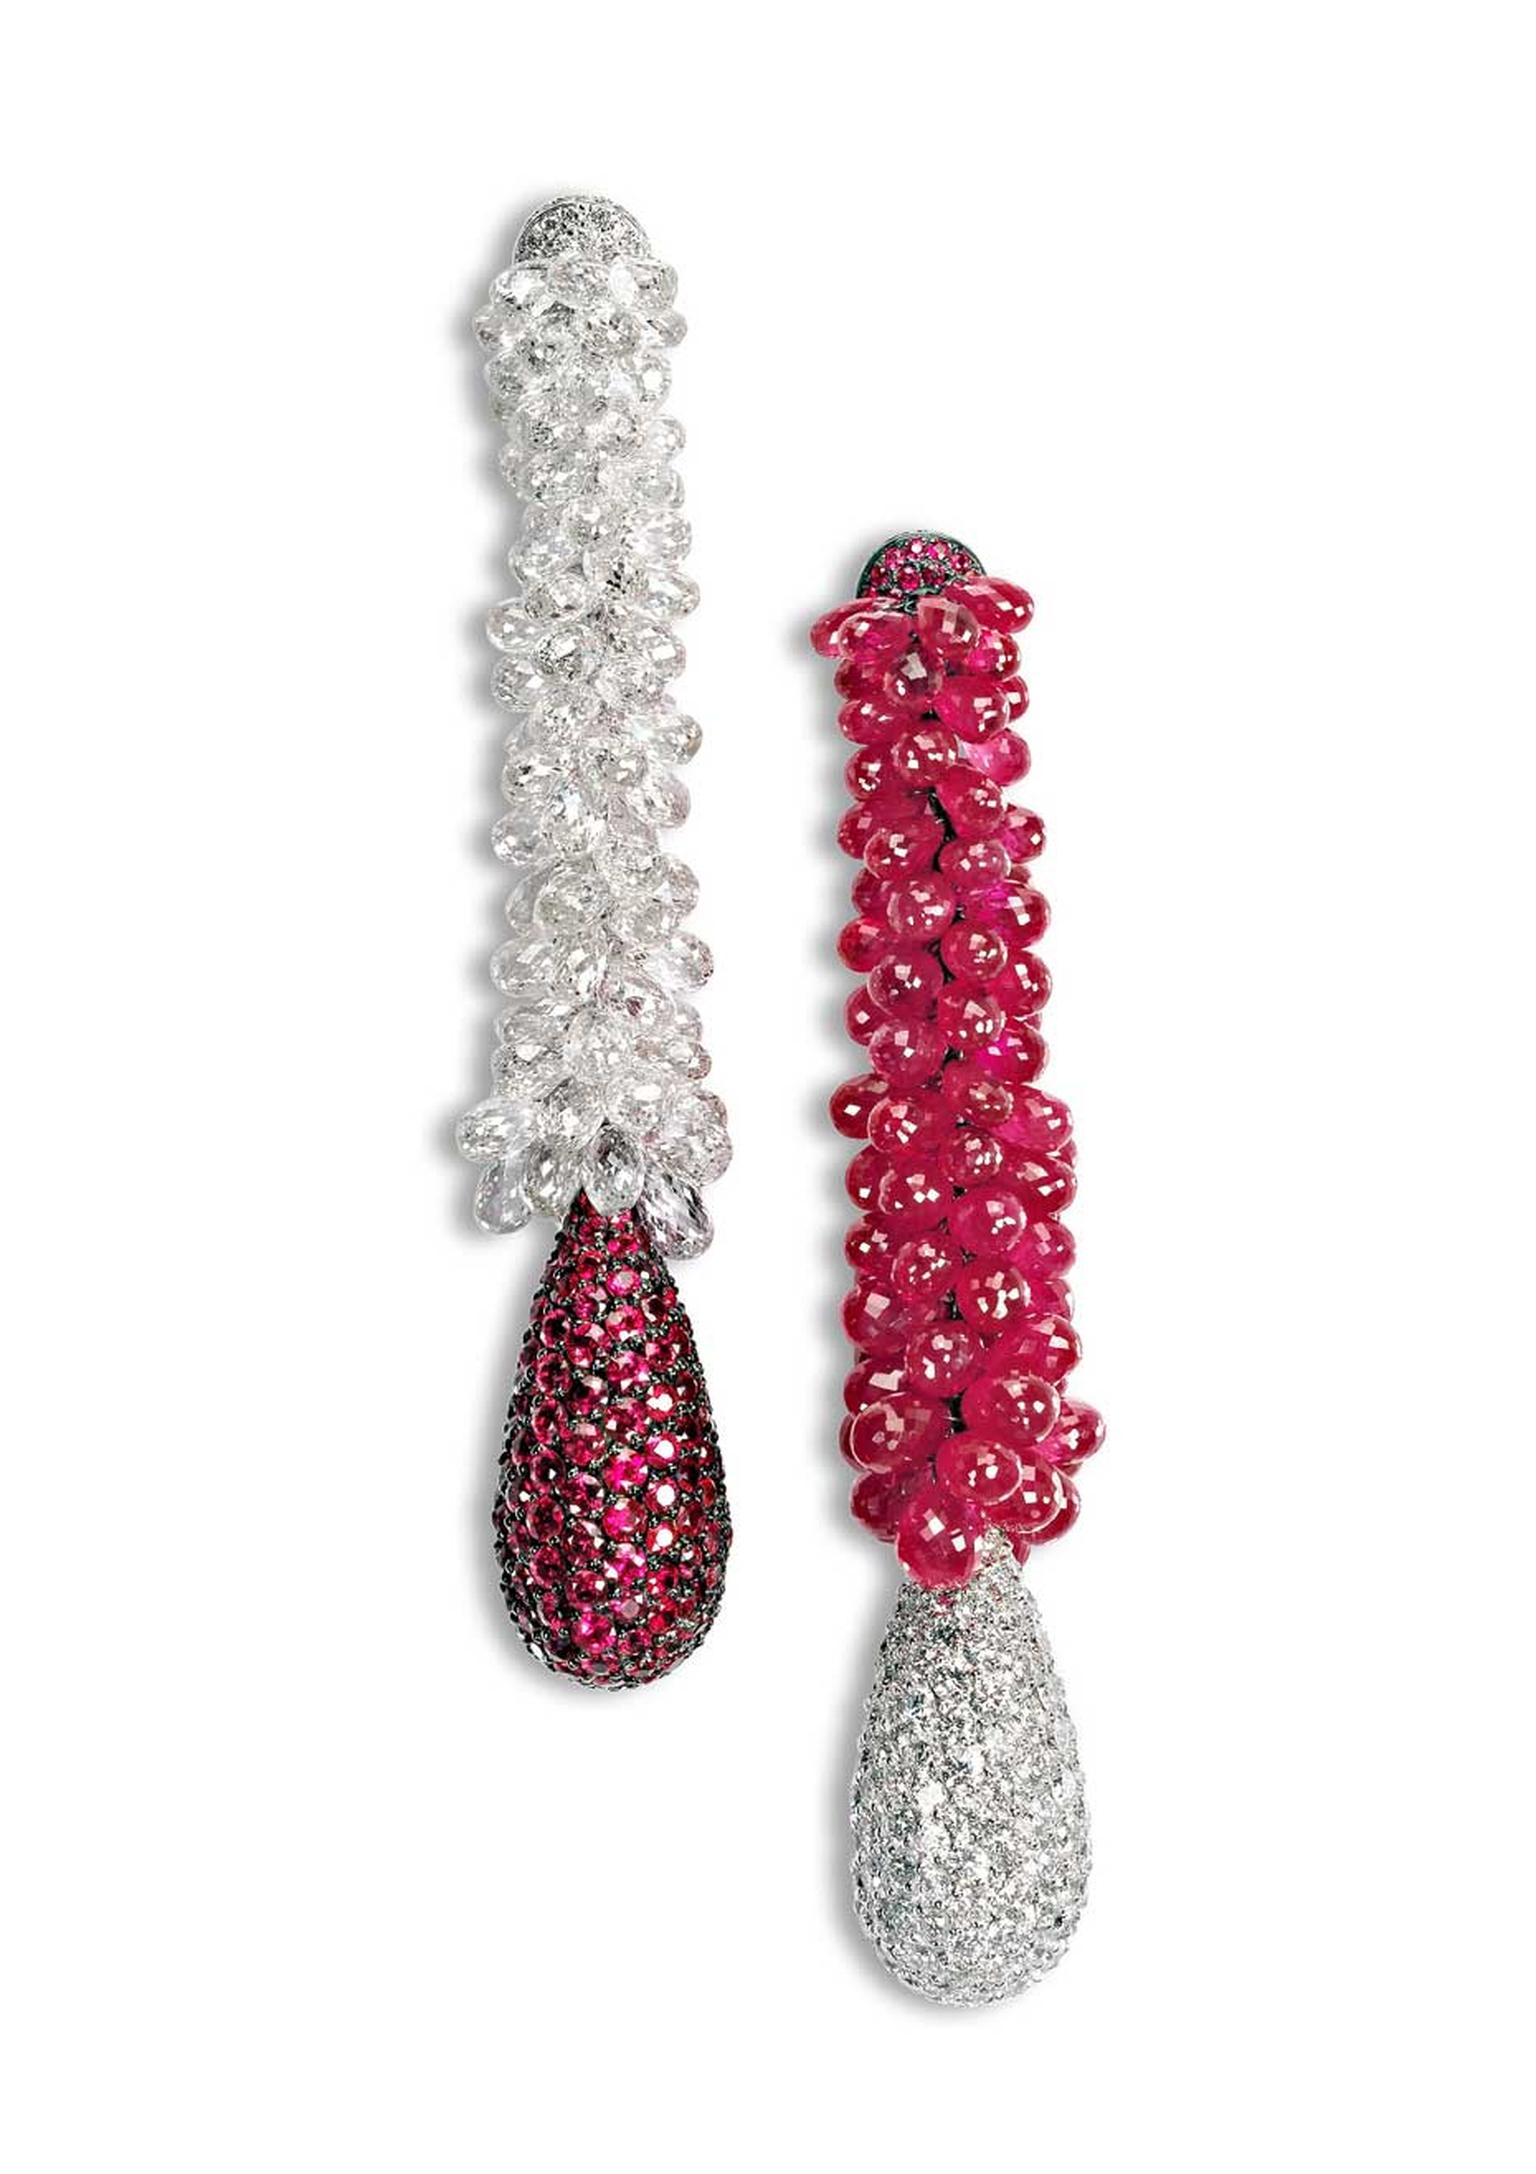 de GRISOGONO Boucles d’Orielle high jewellery white diamond and ruby earrings.